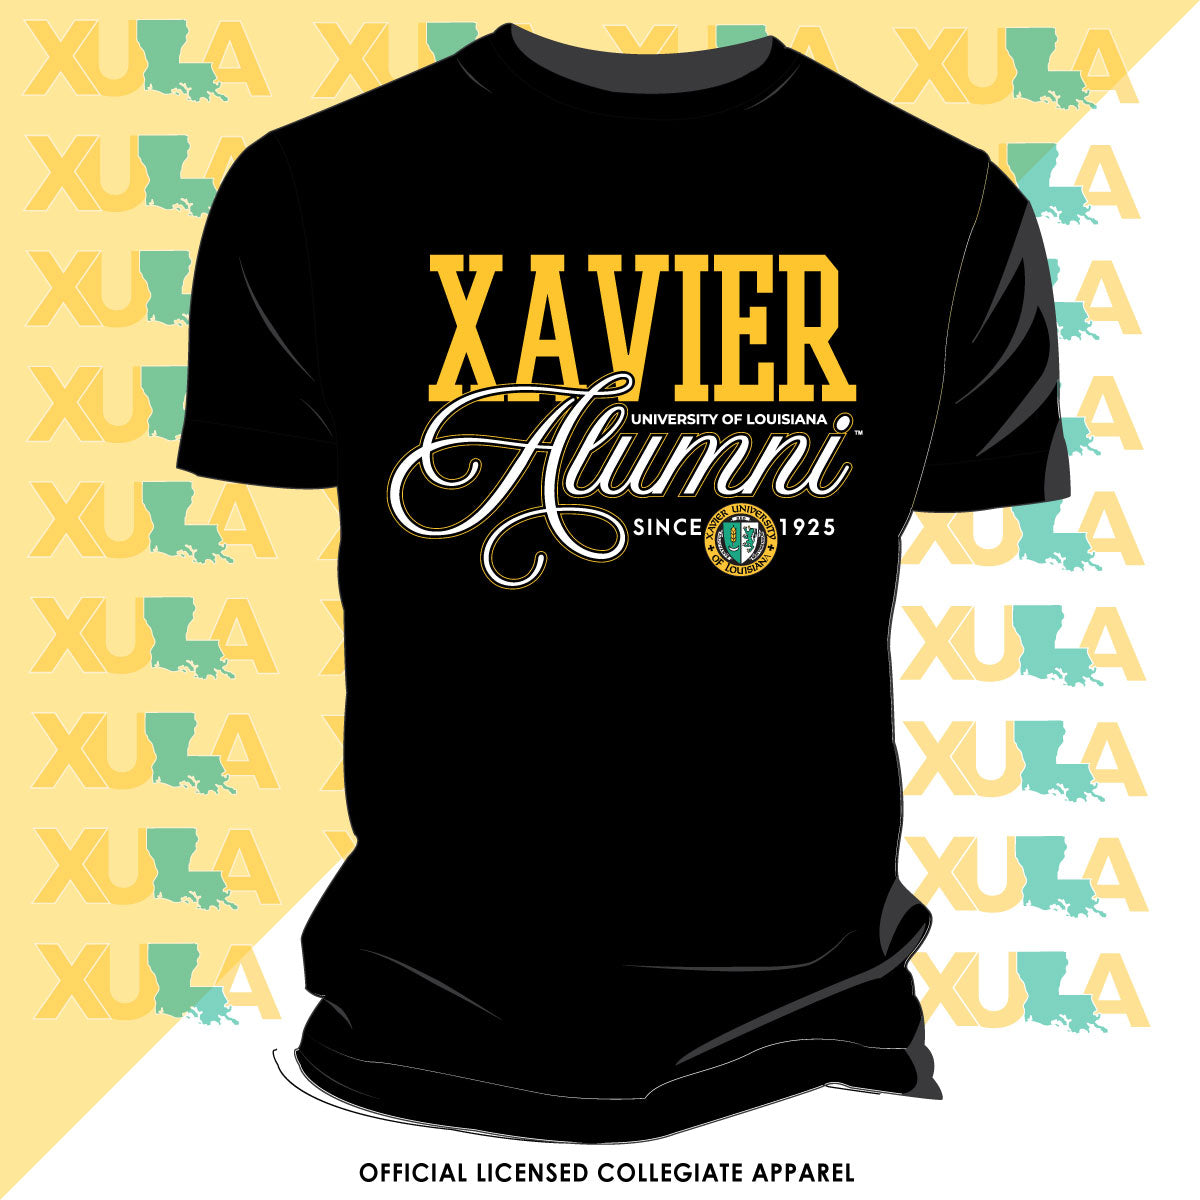 Xavier University of Louisiana Keychains & Lanyards, Xavier